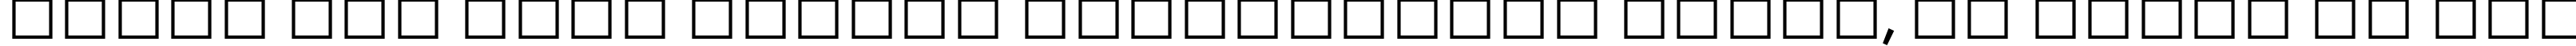 Пример написания шрифтом Tw Cen MT Bold Italic текста на русском